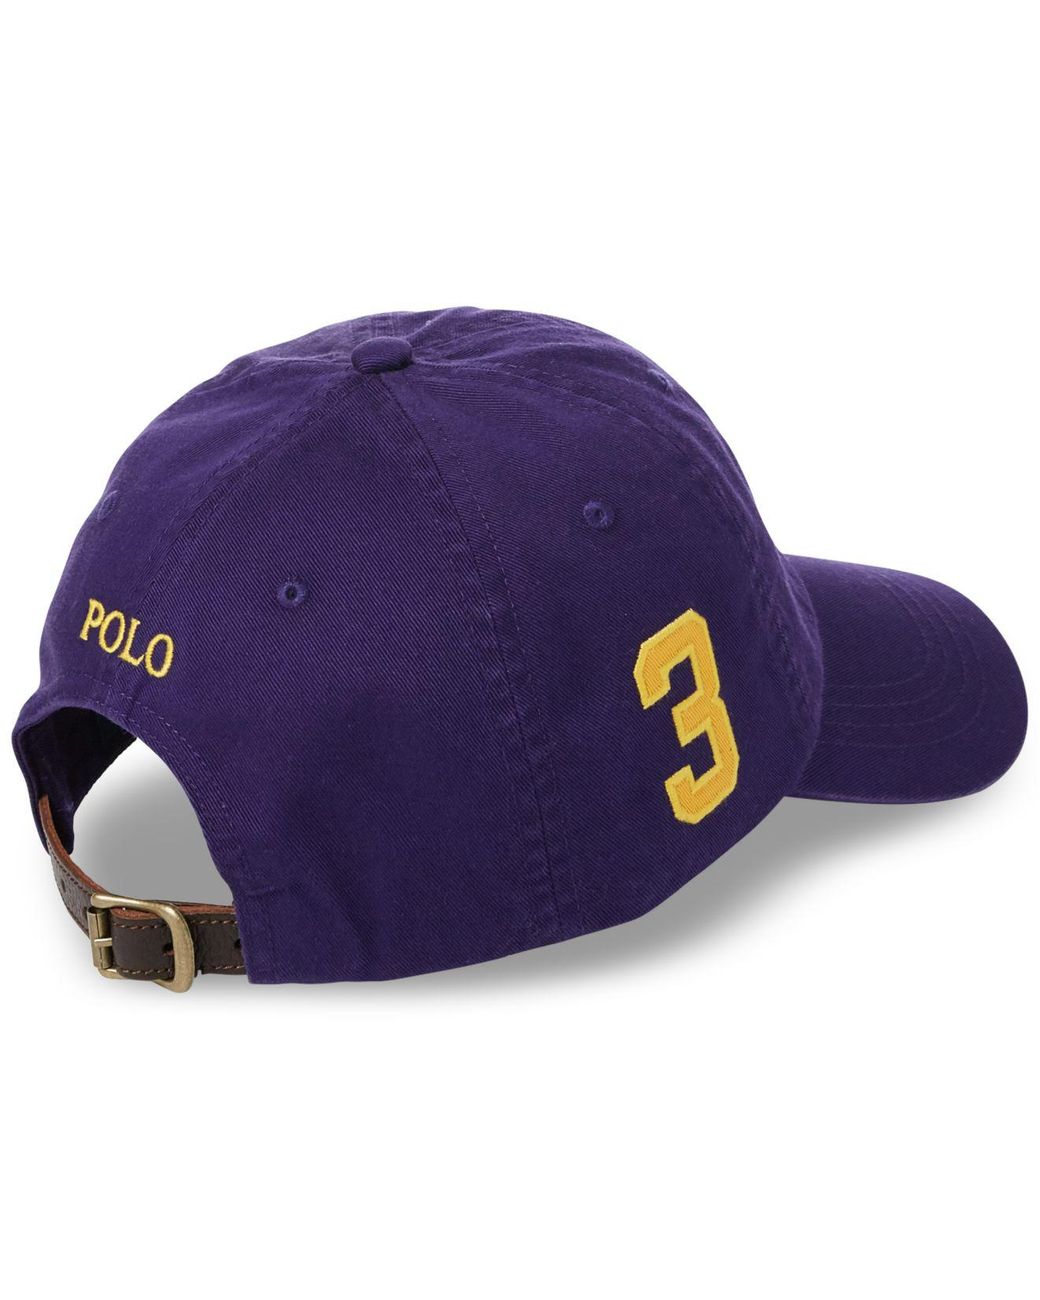 POLO RALPH LAUREN Pony baseball cap